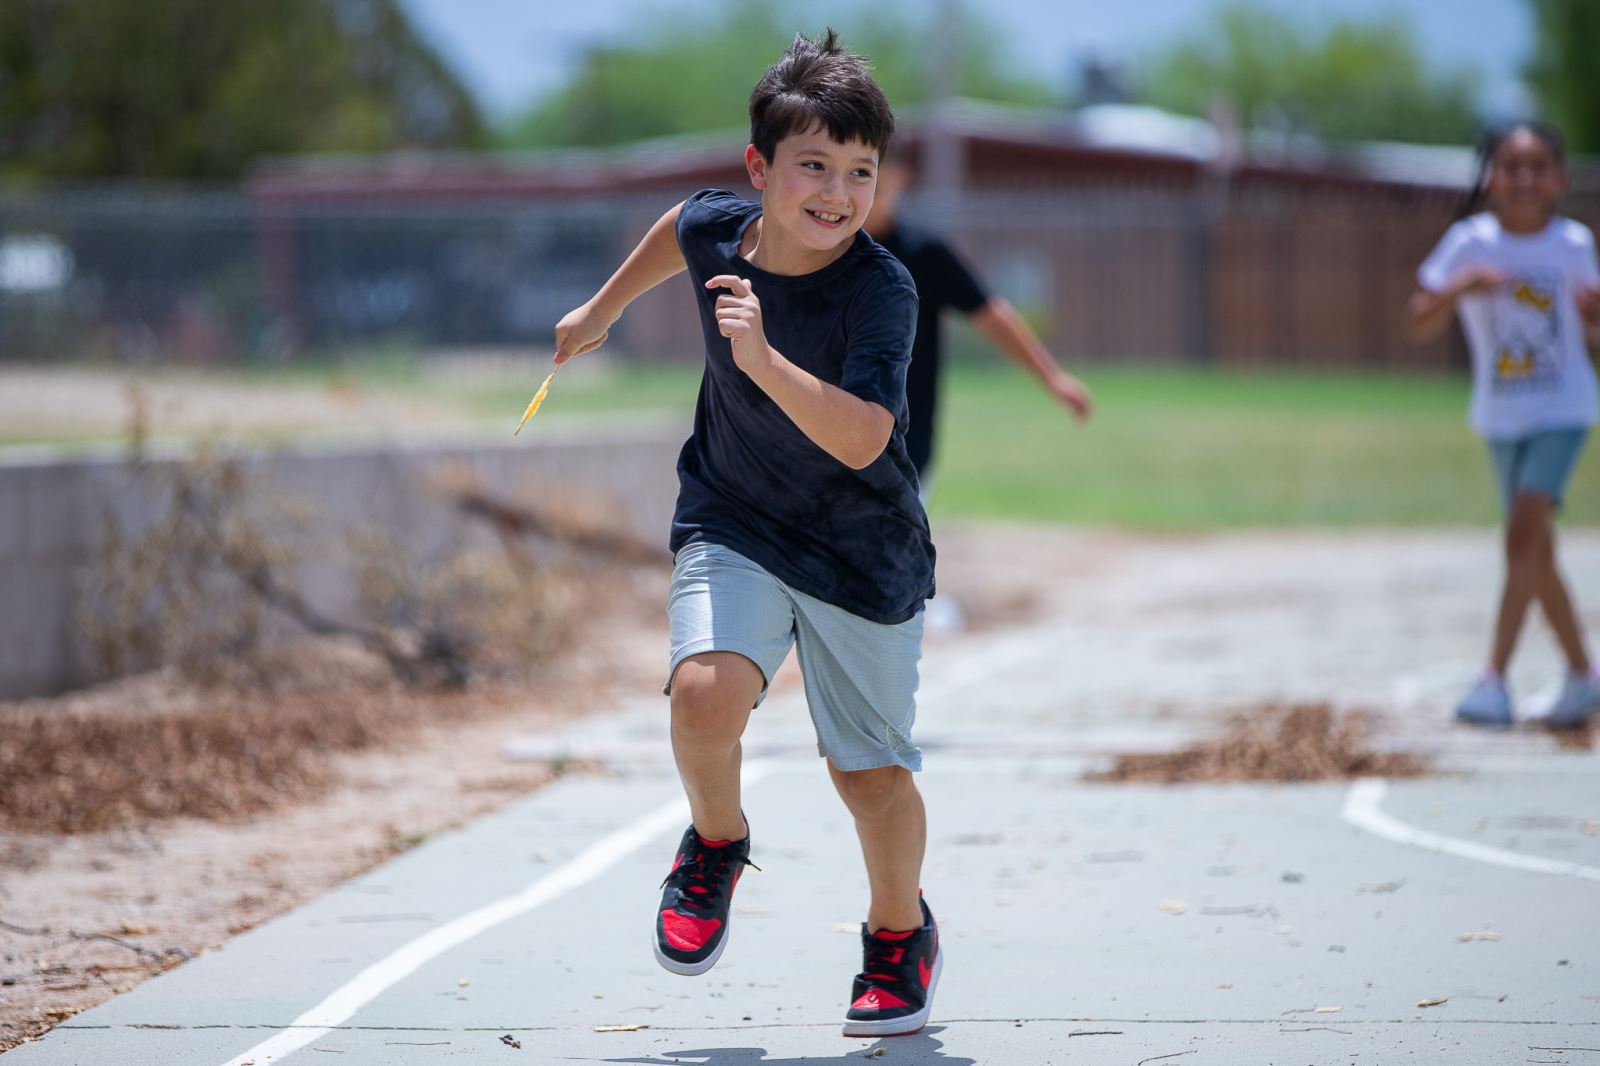 A student has fun running during recess.